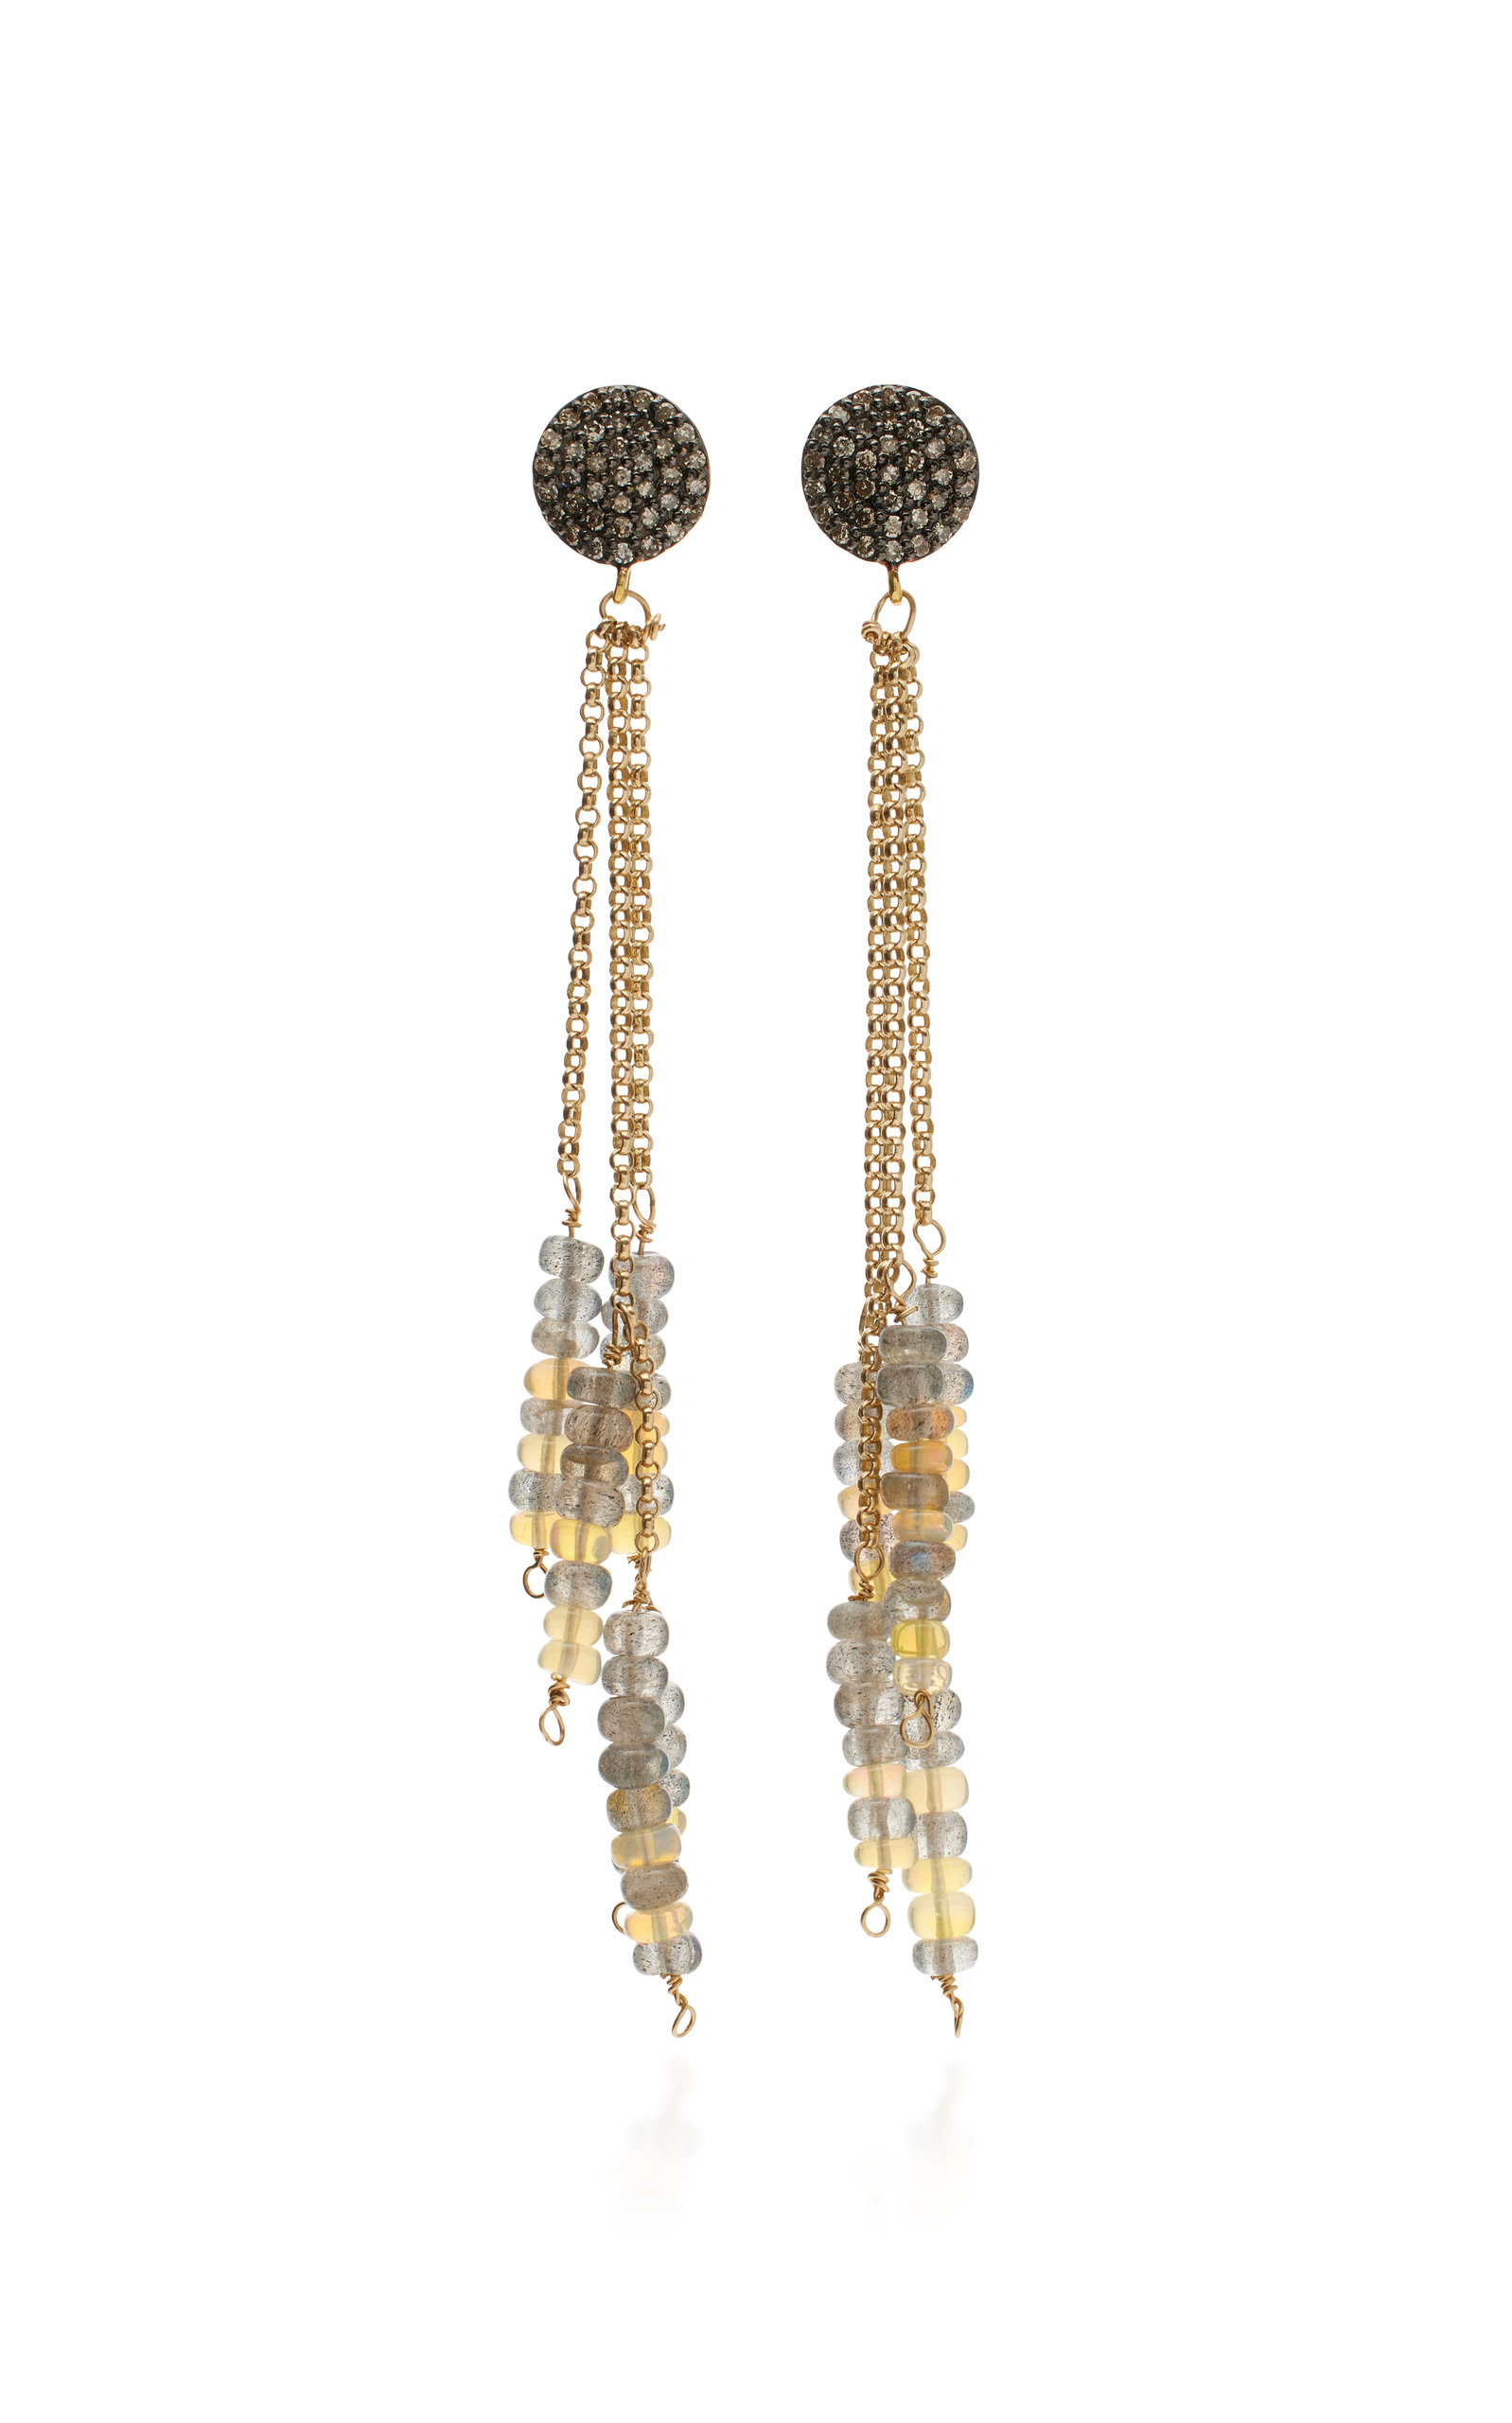 Joie DiGiovanni Women's Smooth Sunset Diamond 18K Gold Chain Earrings